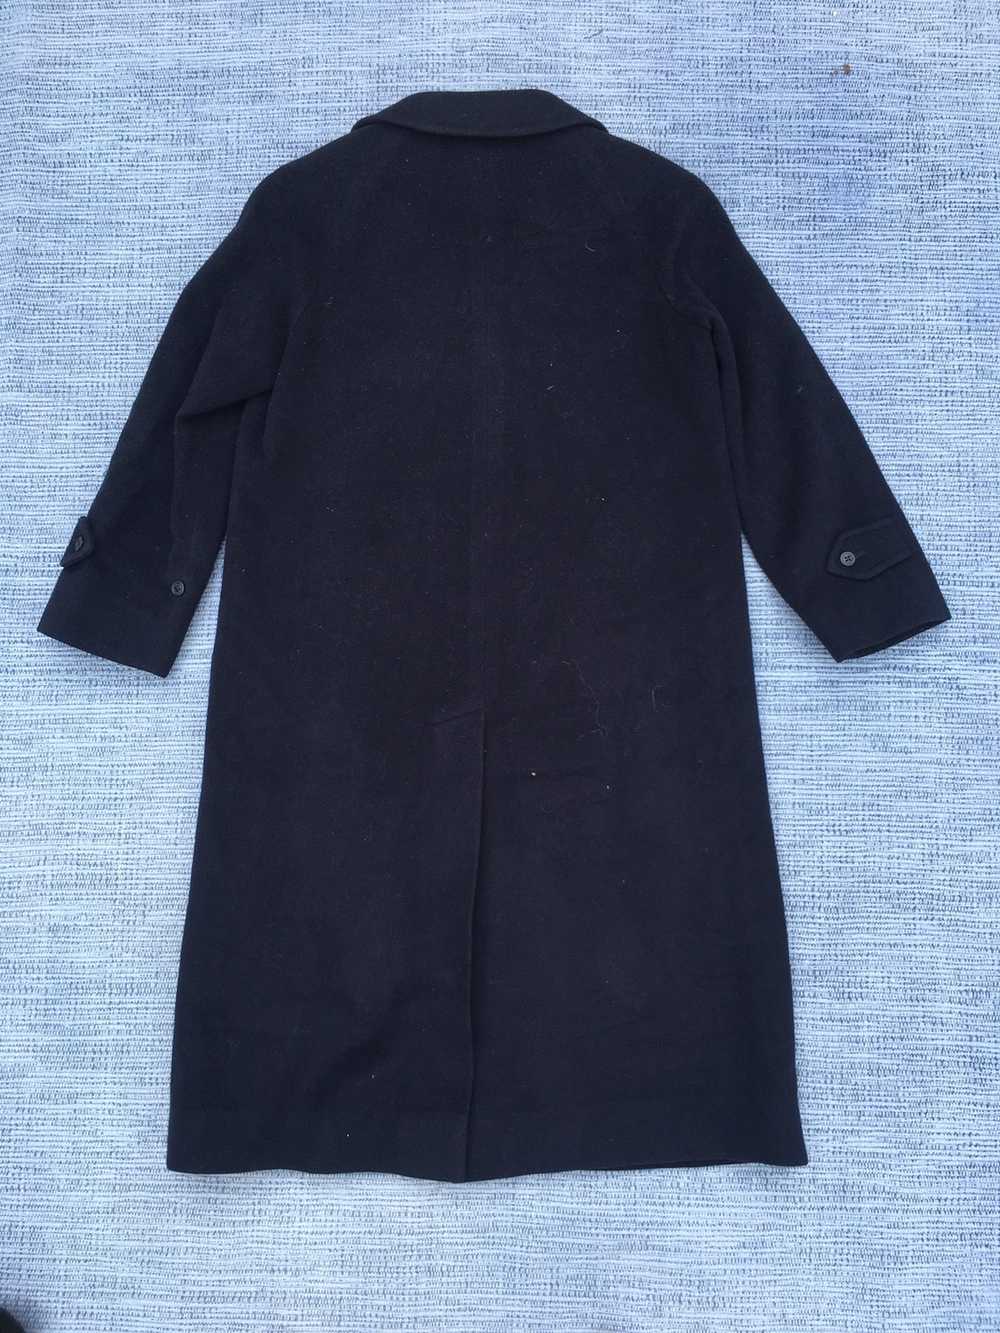 Giorgio Armani black overcoat - image 1